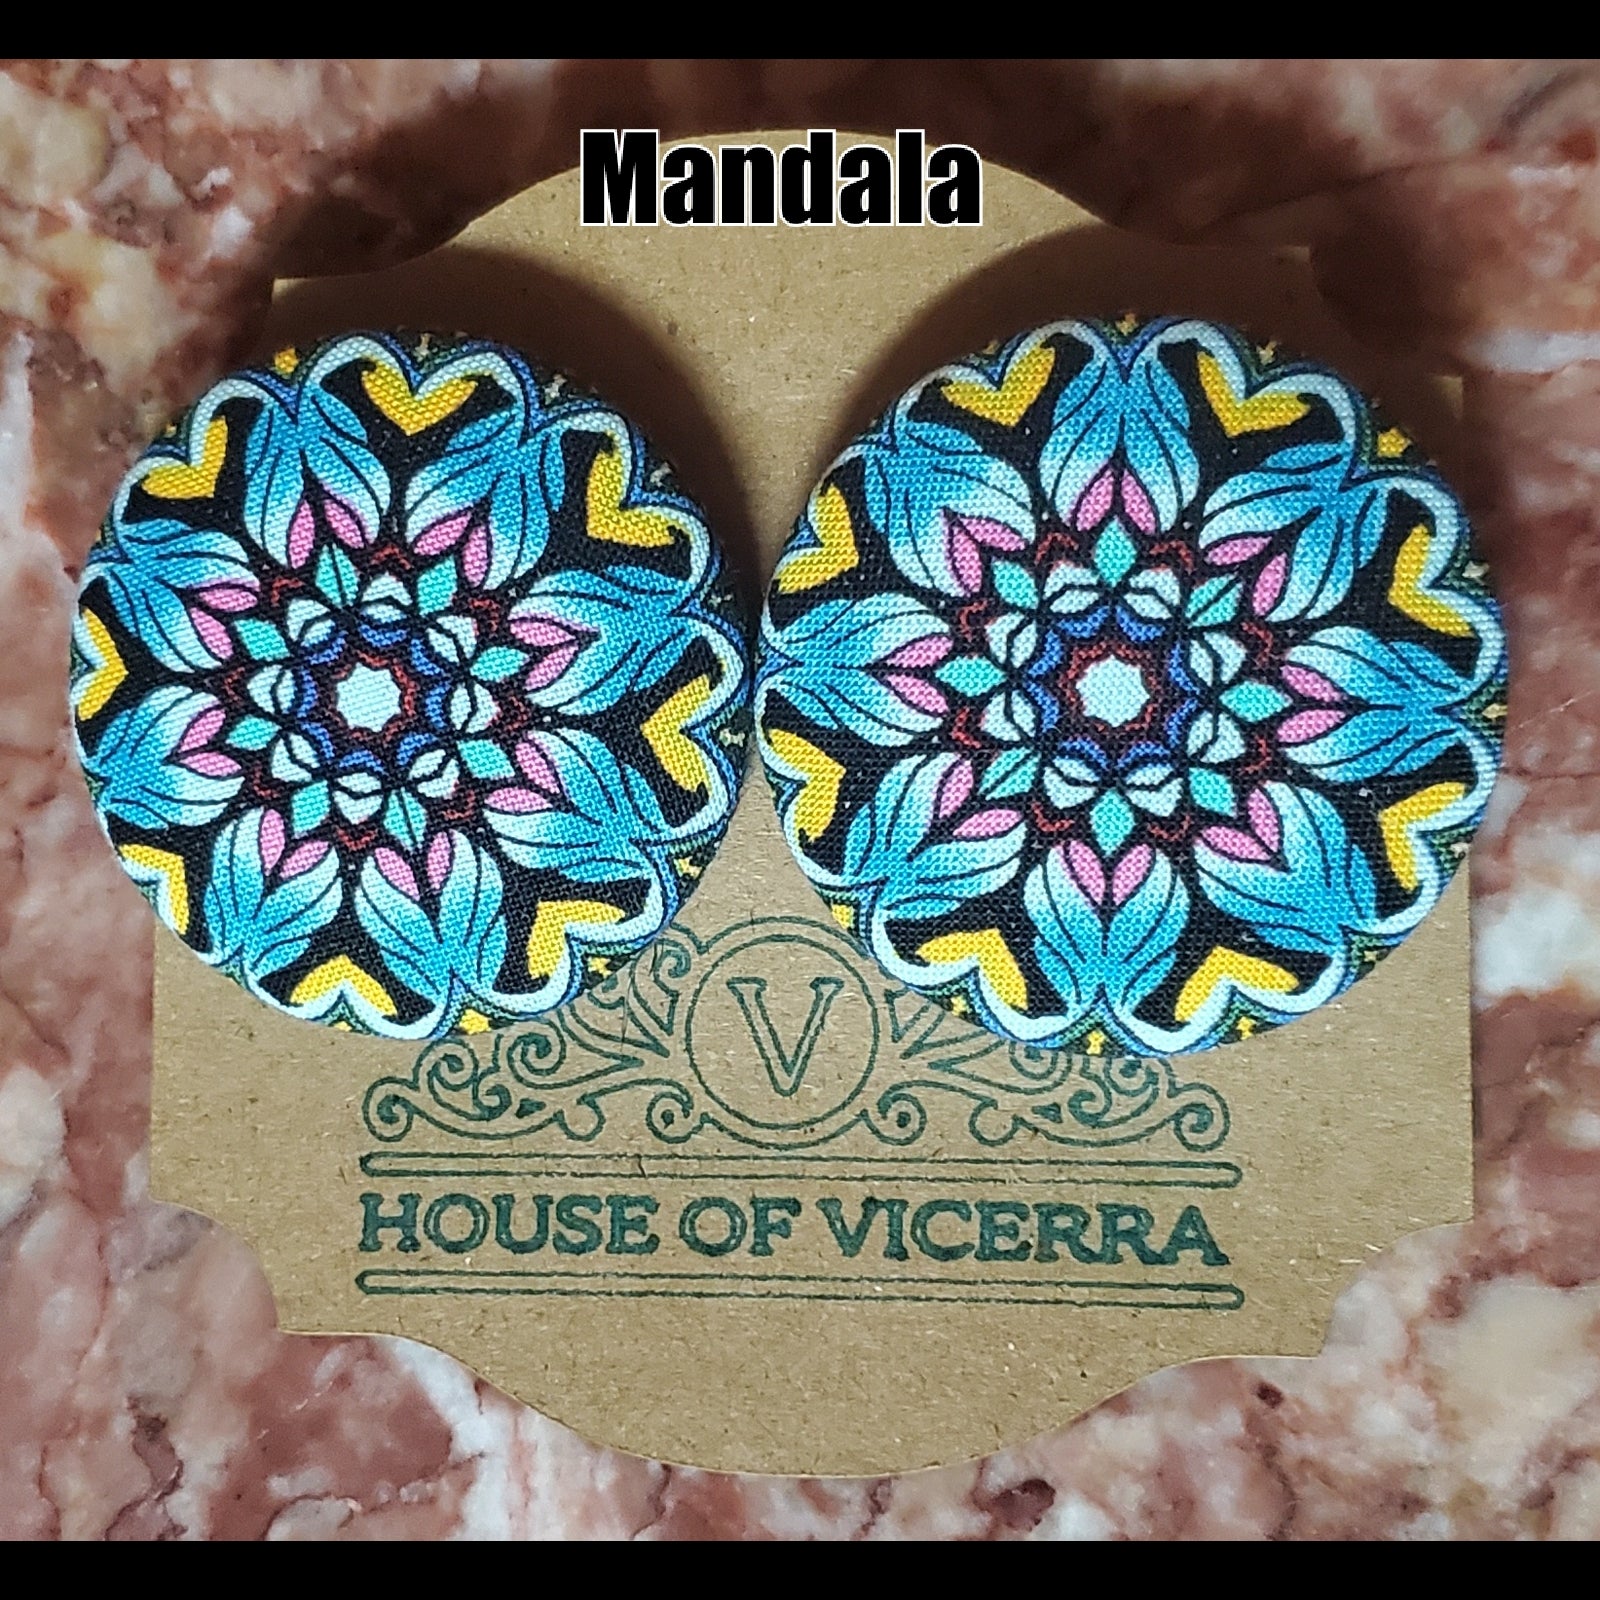 Mandala print  XL button earrings